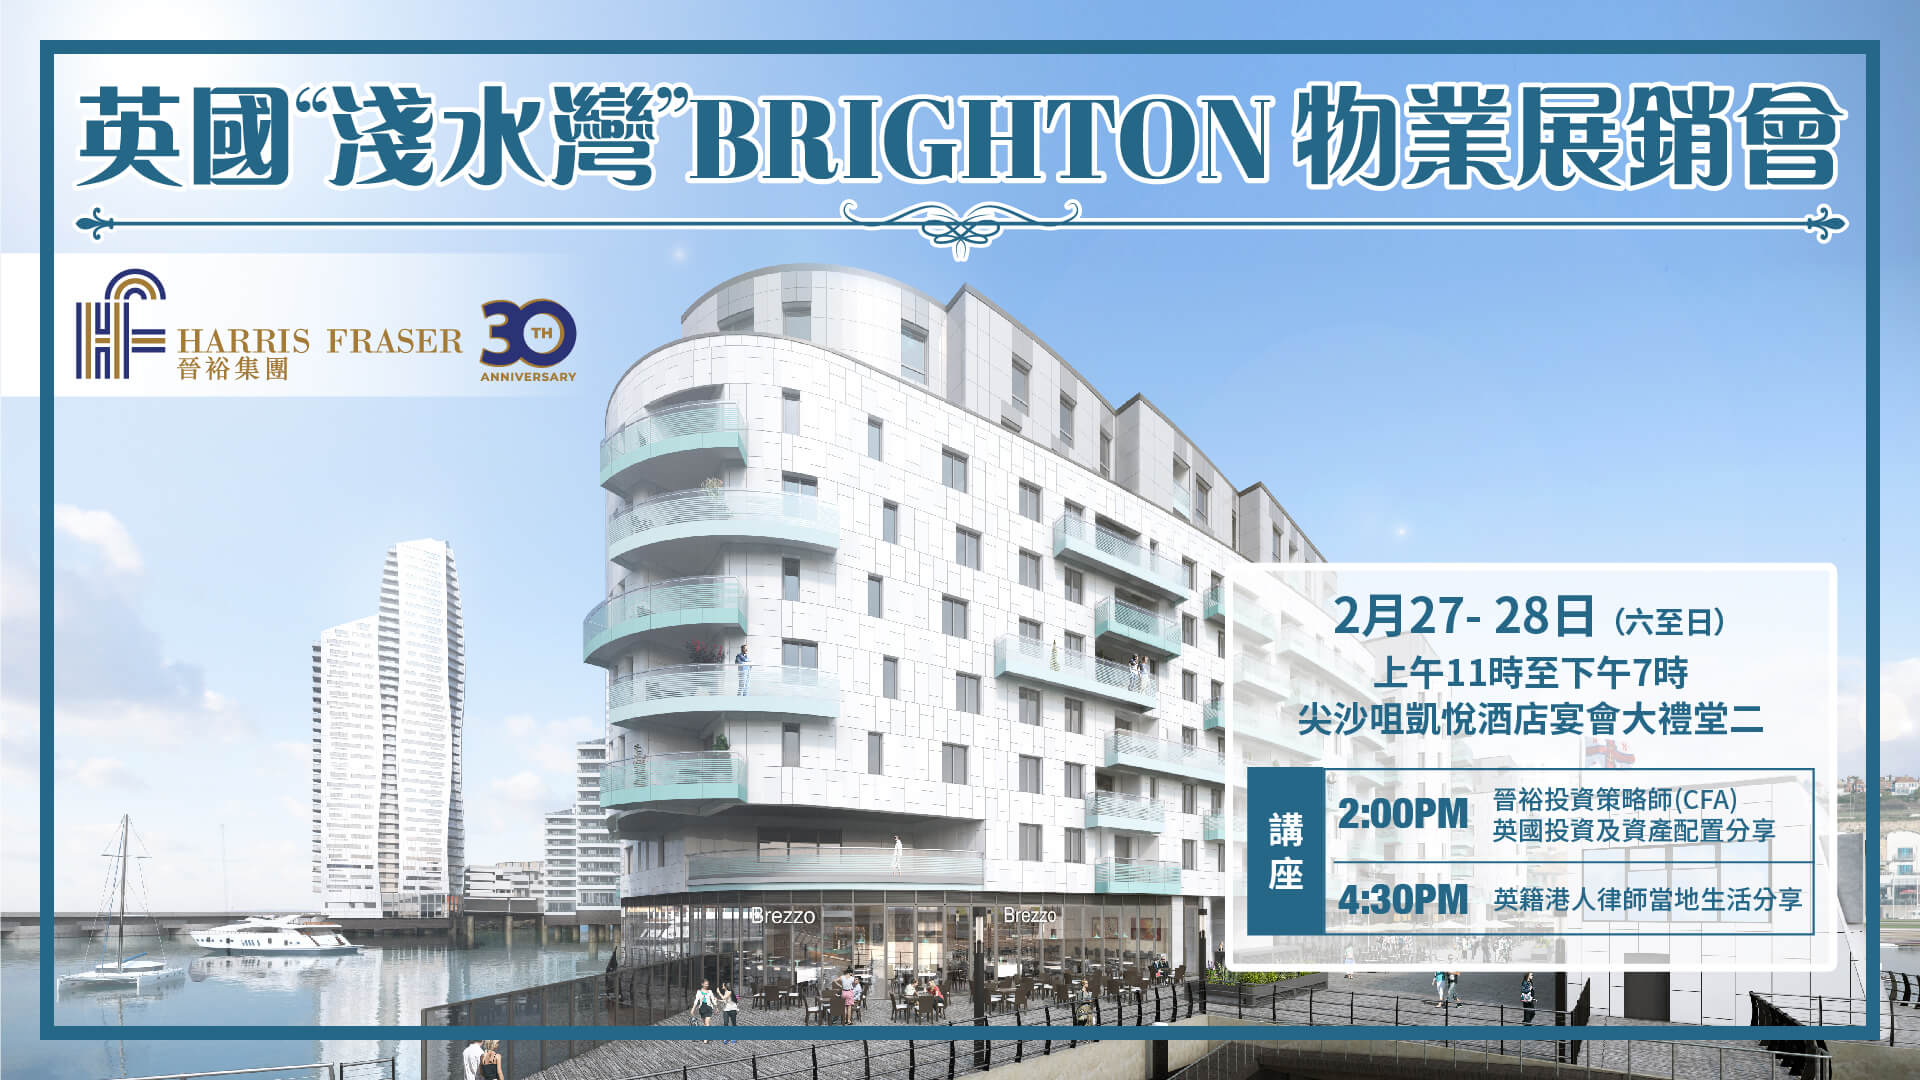 Brighton Exhibition Enrollment